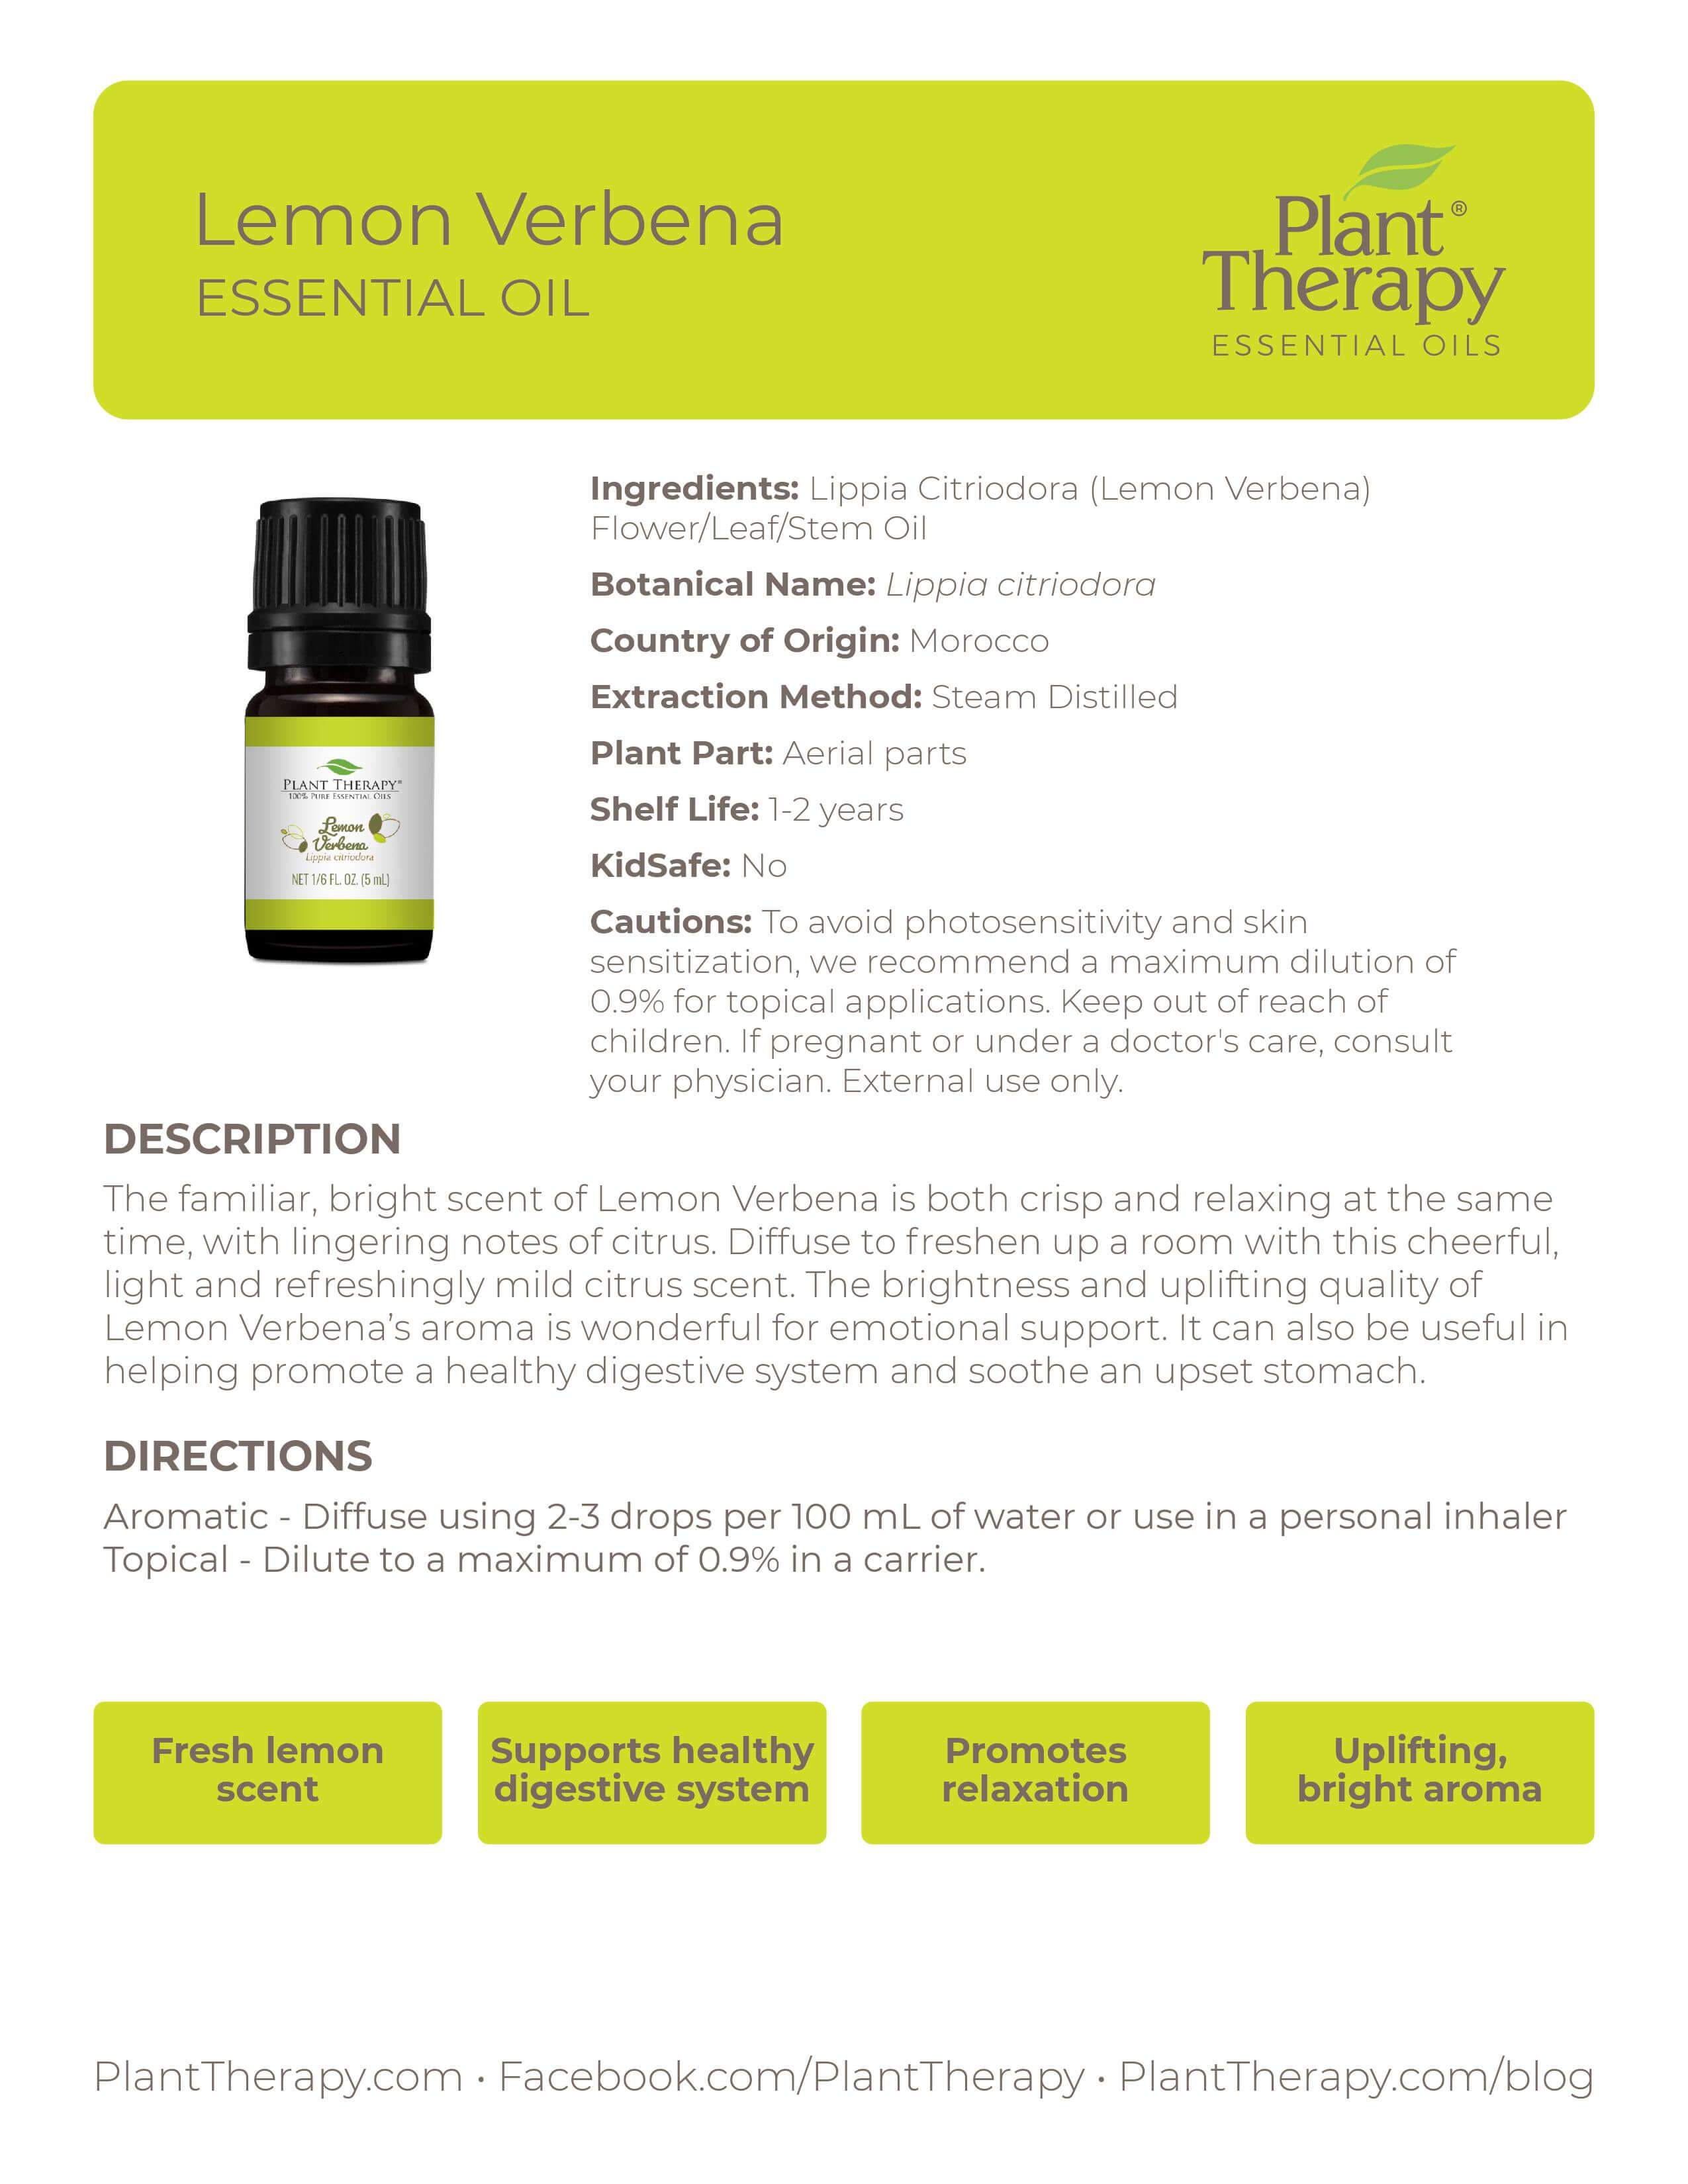 Plant Therapy Lemon Verbena Essential Oil